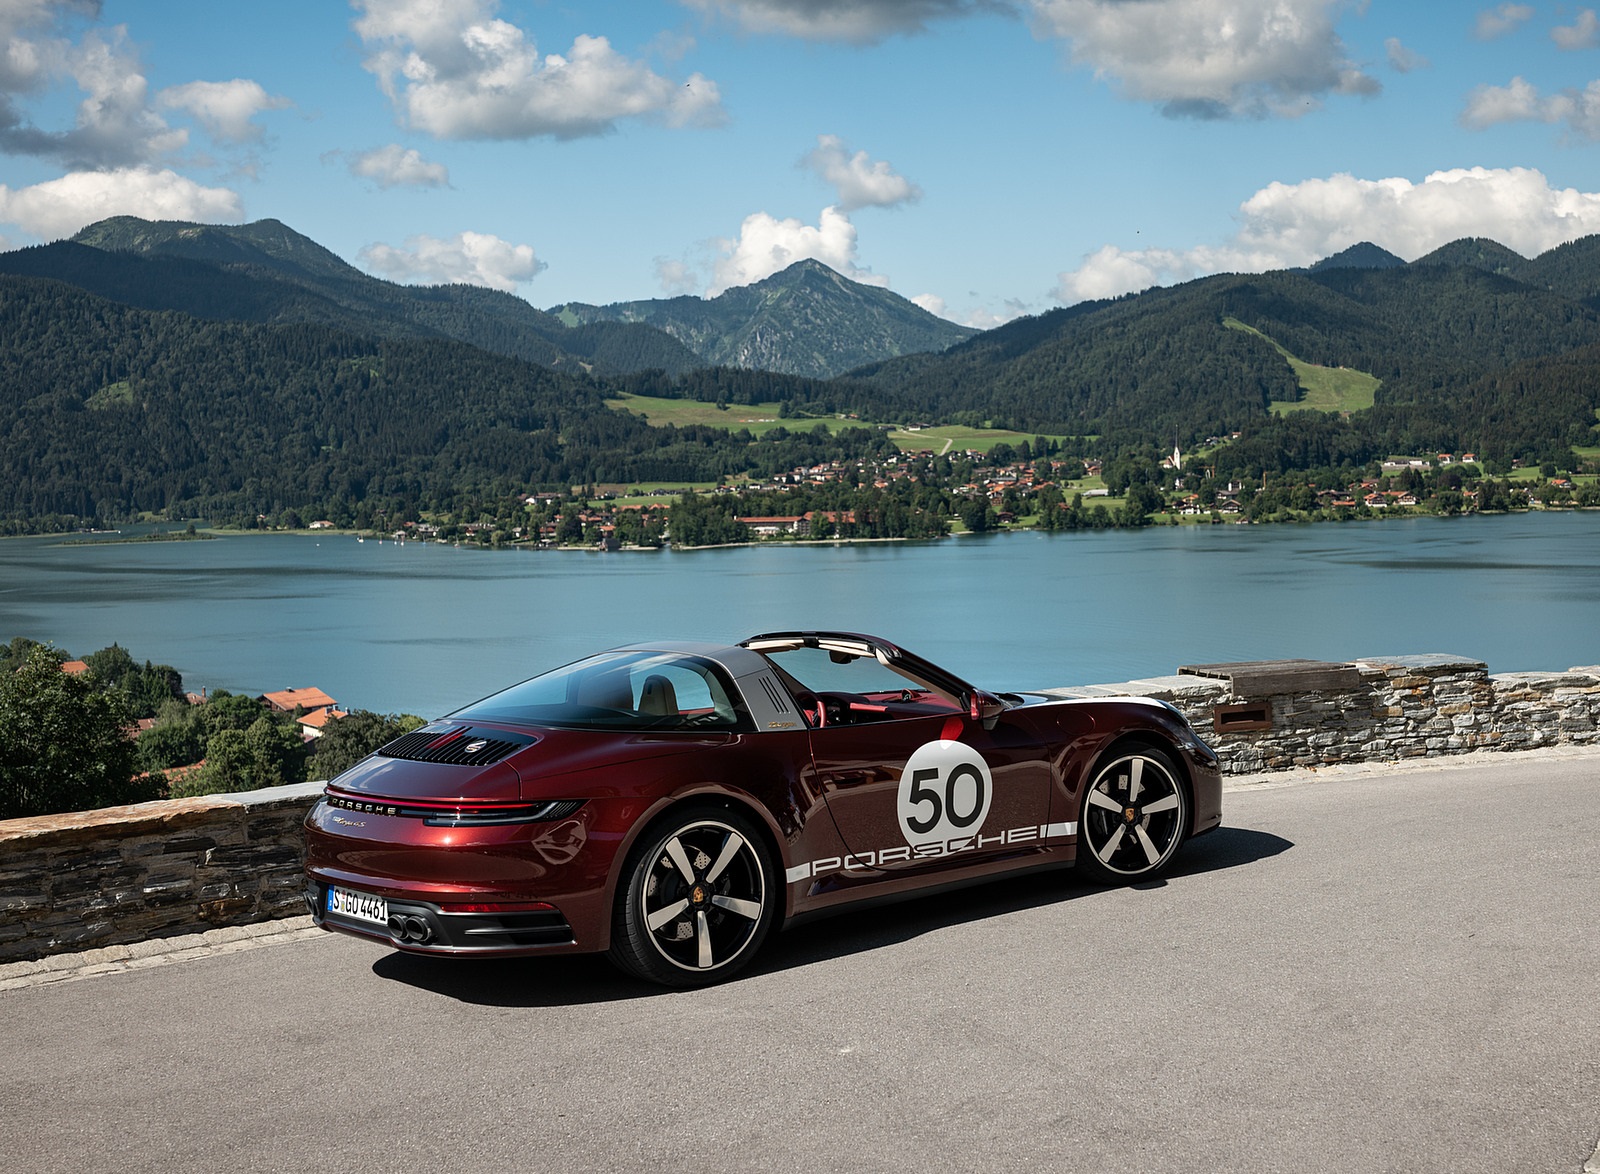 2021 Porsche 911 Targa 4S Heritage Design Edition (Color: Cherry Metallic) Rear Three-Quarter Wallpapers #31 of 82